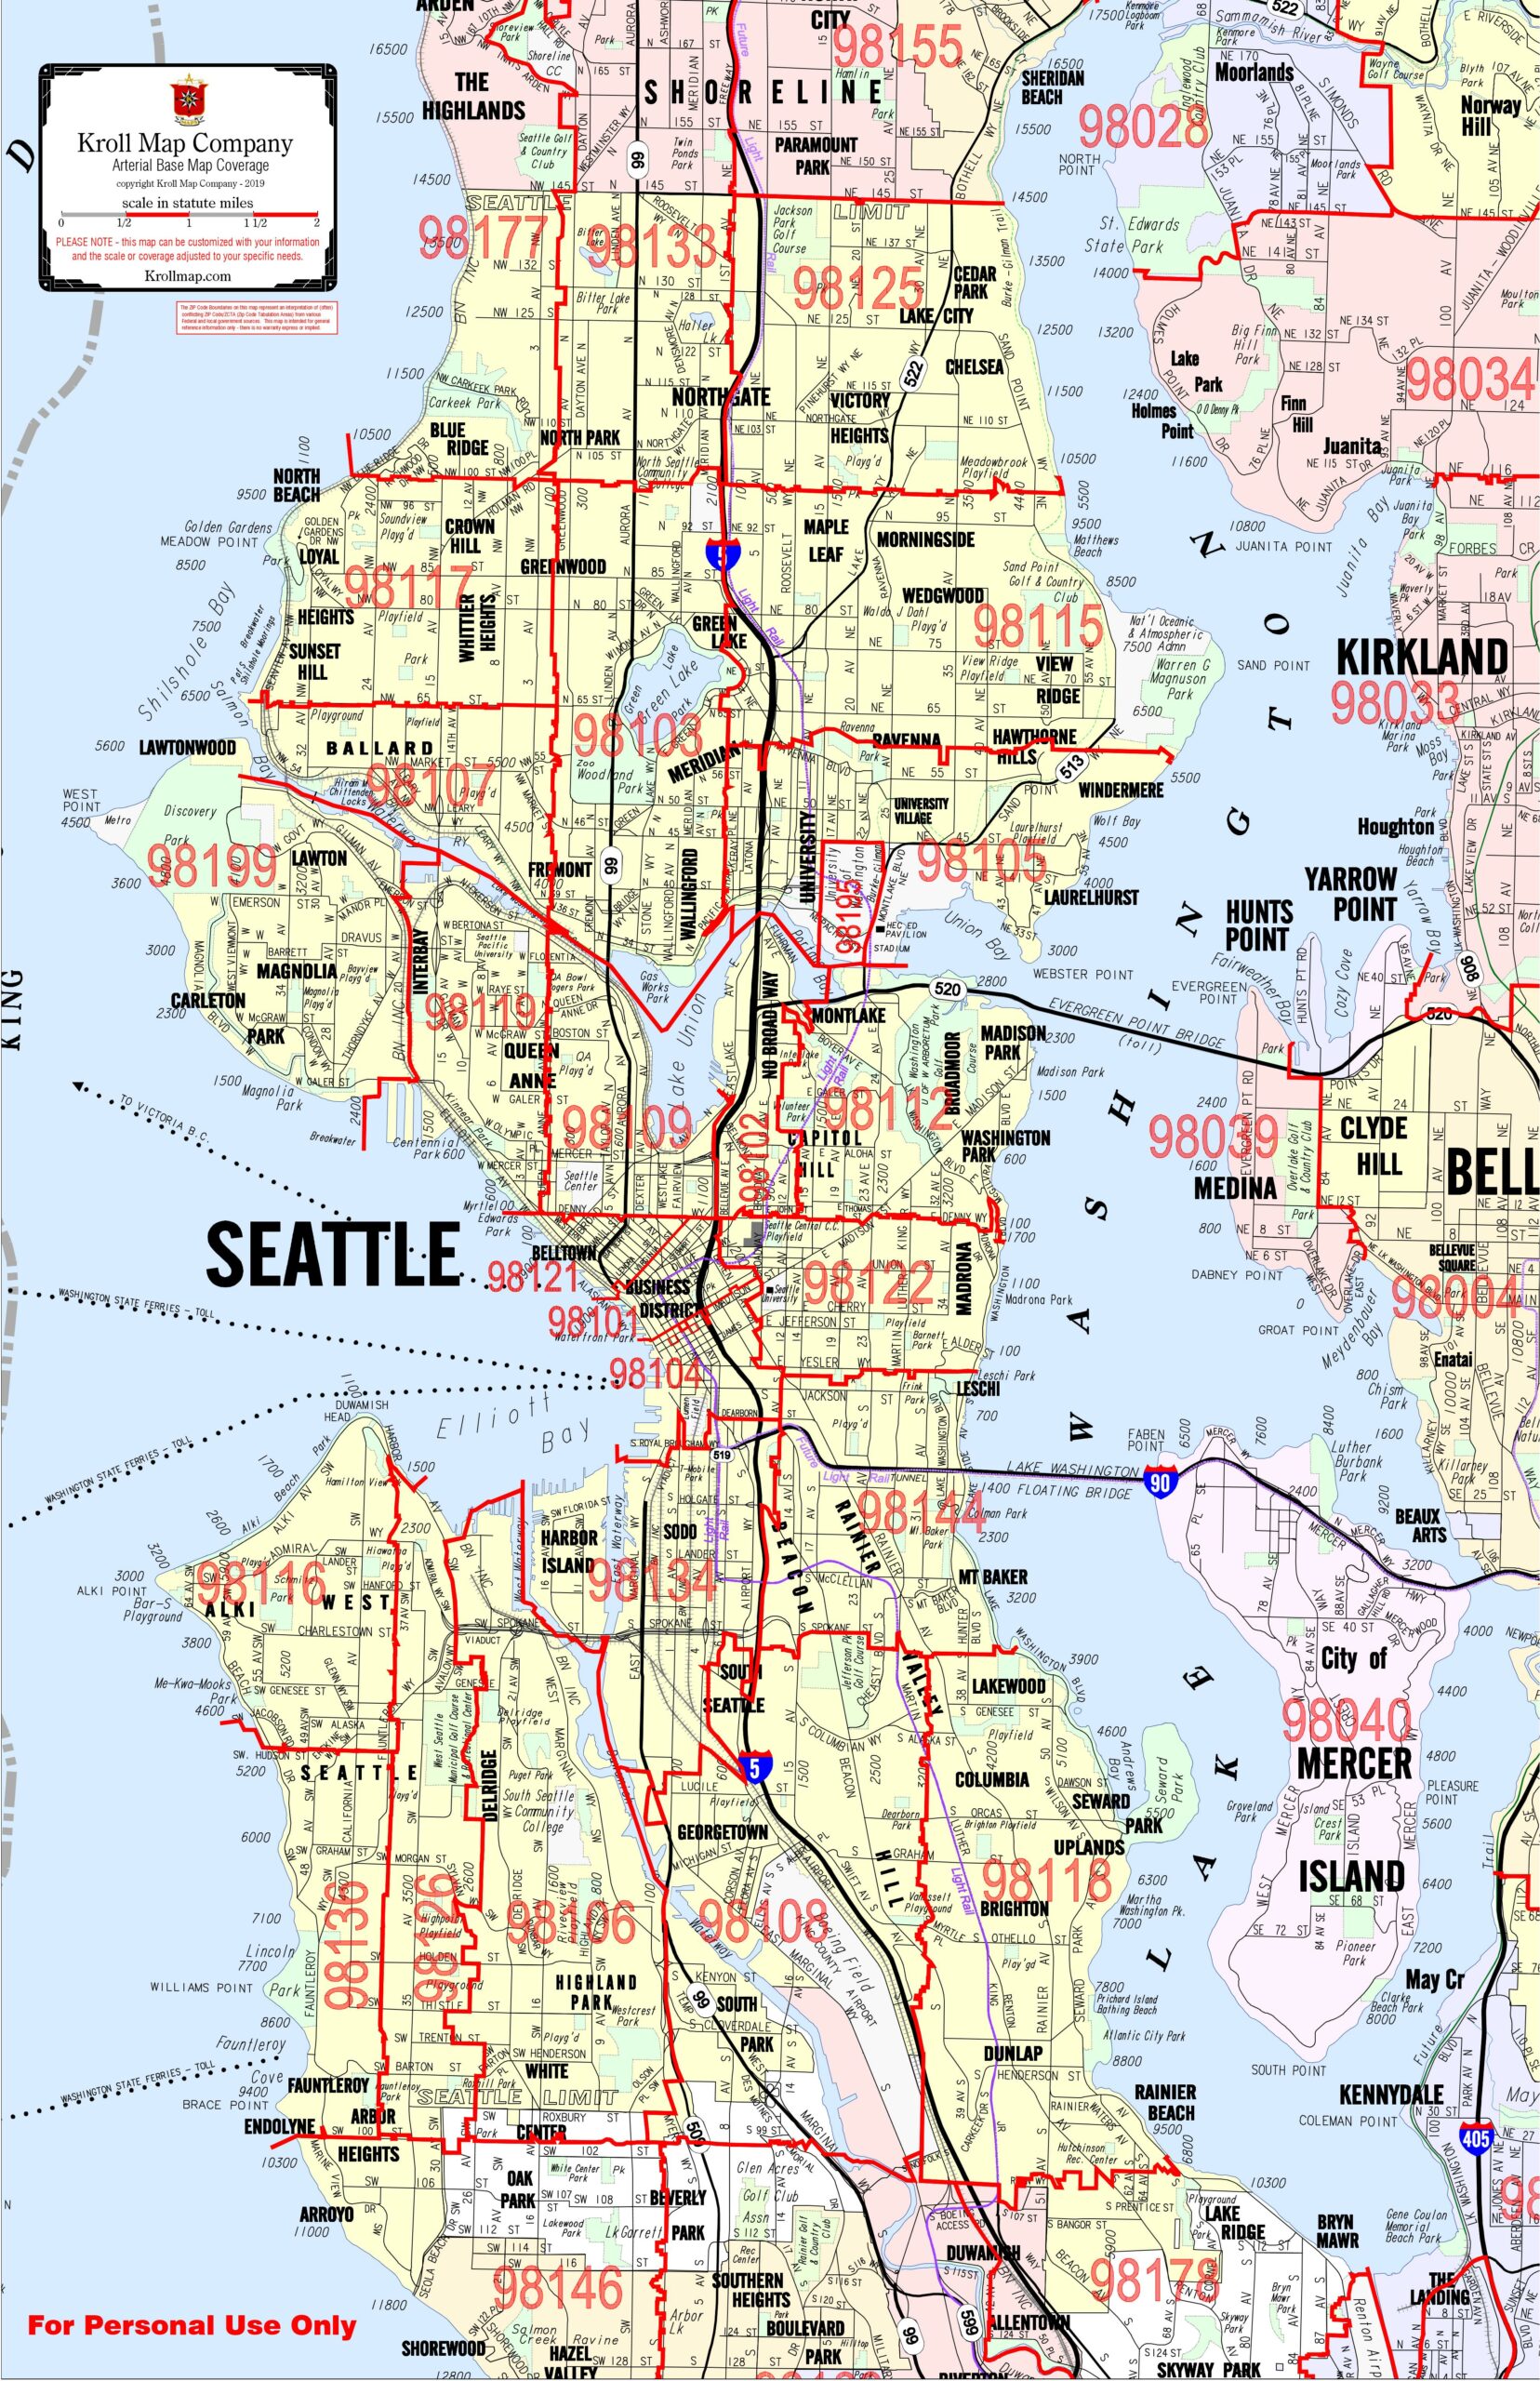 Download Arterial ZIP Code (ZCTA) Maps - Kroll Map Company